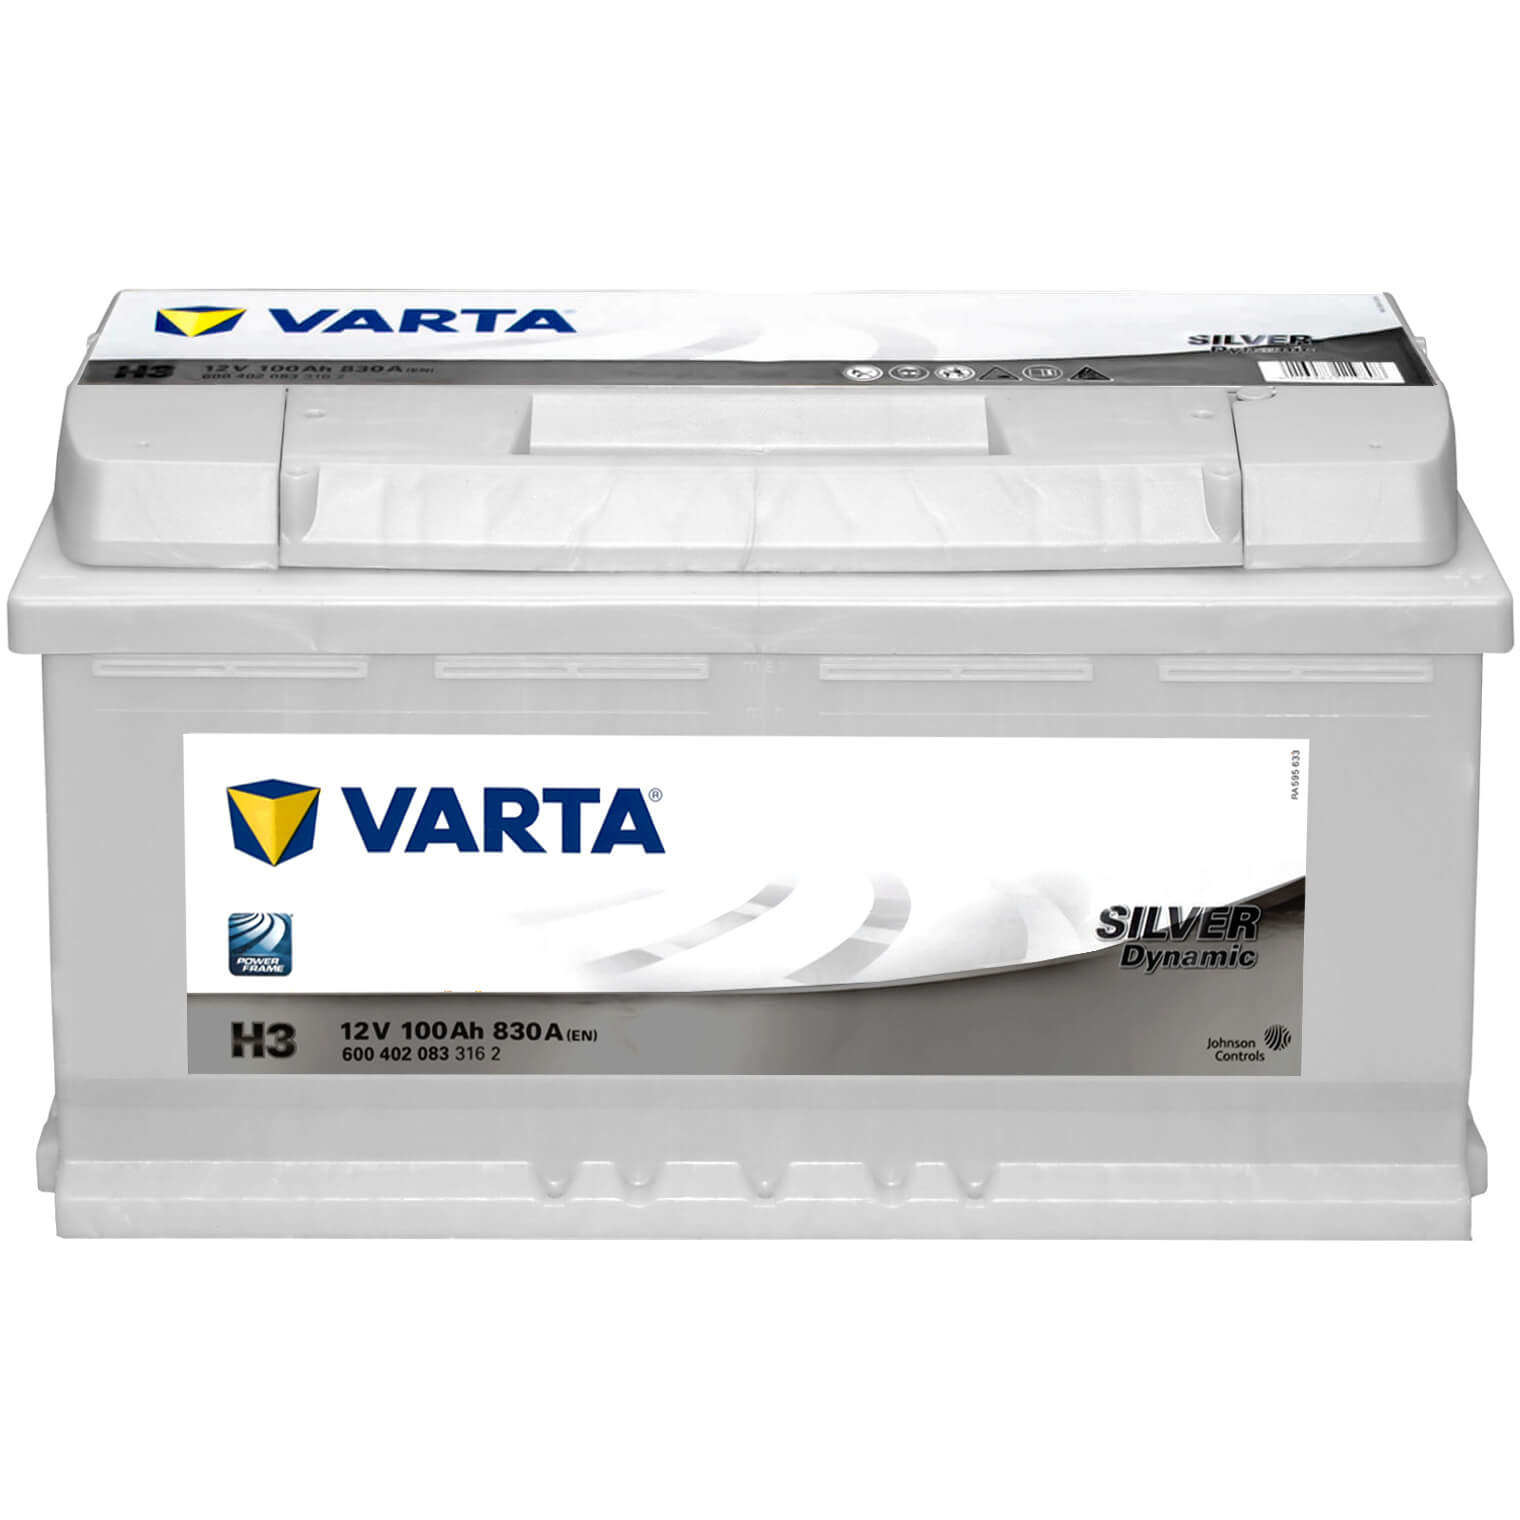 Varta H3 Silver Dynamic 12V 100Ah Batterie 600 402 083